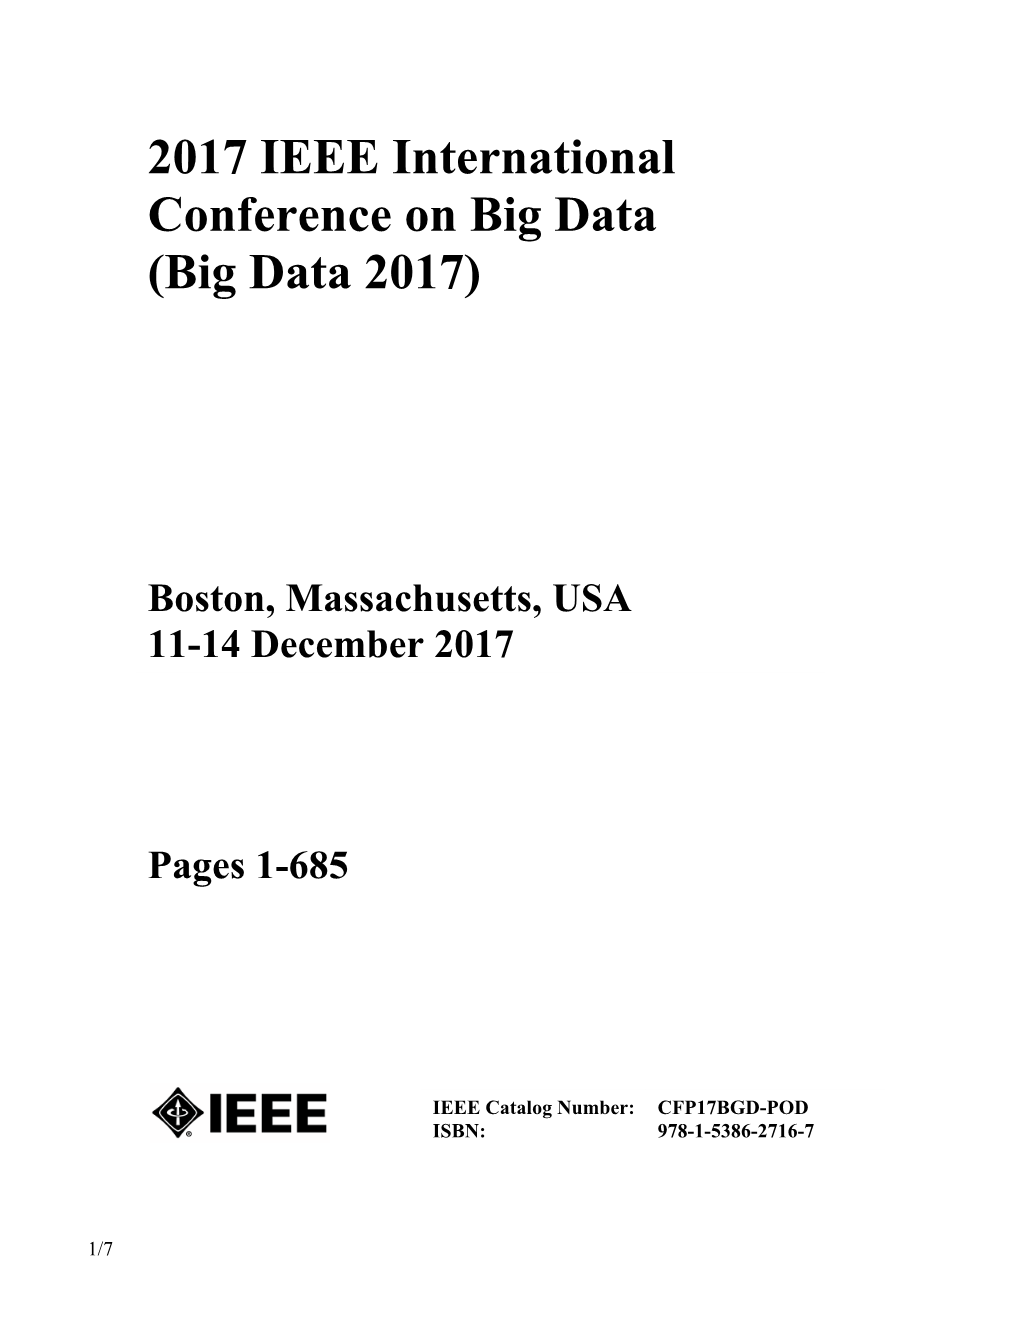 Big Data 2017)